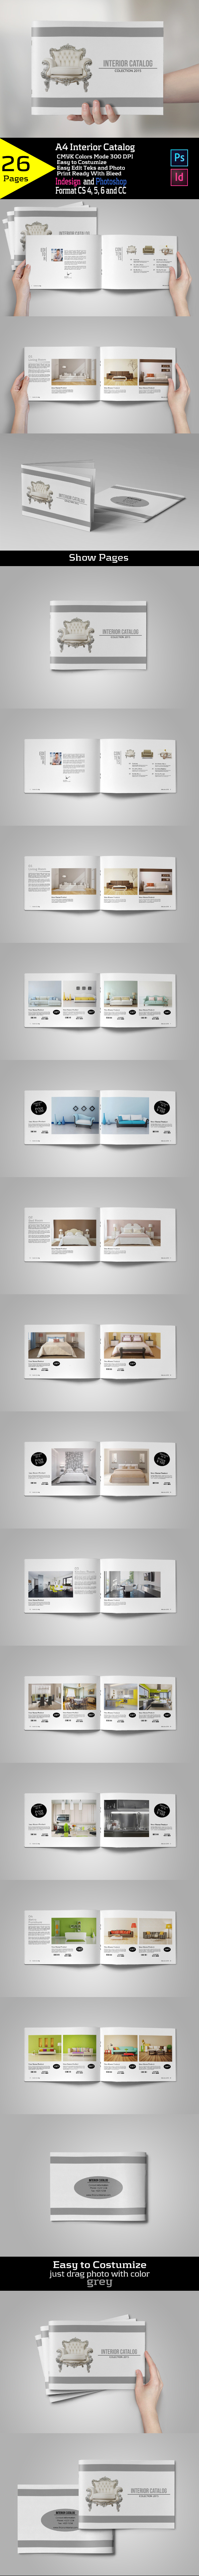 a4 catalogs Interior product sale furniture Multipurpose decor psd InDesign brochure